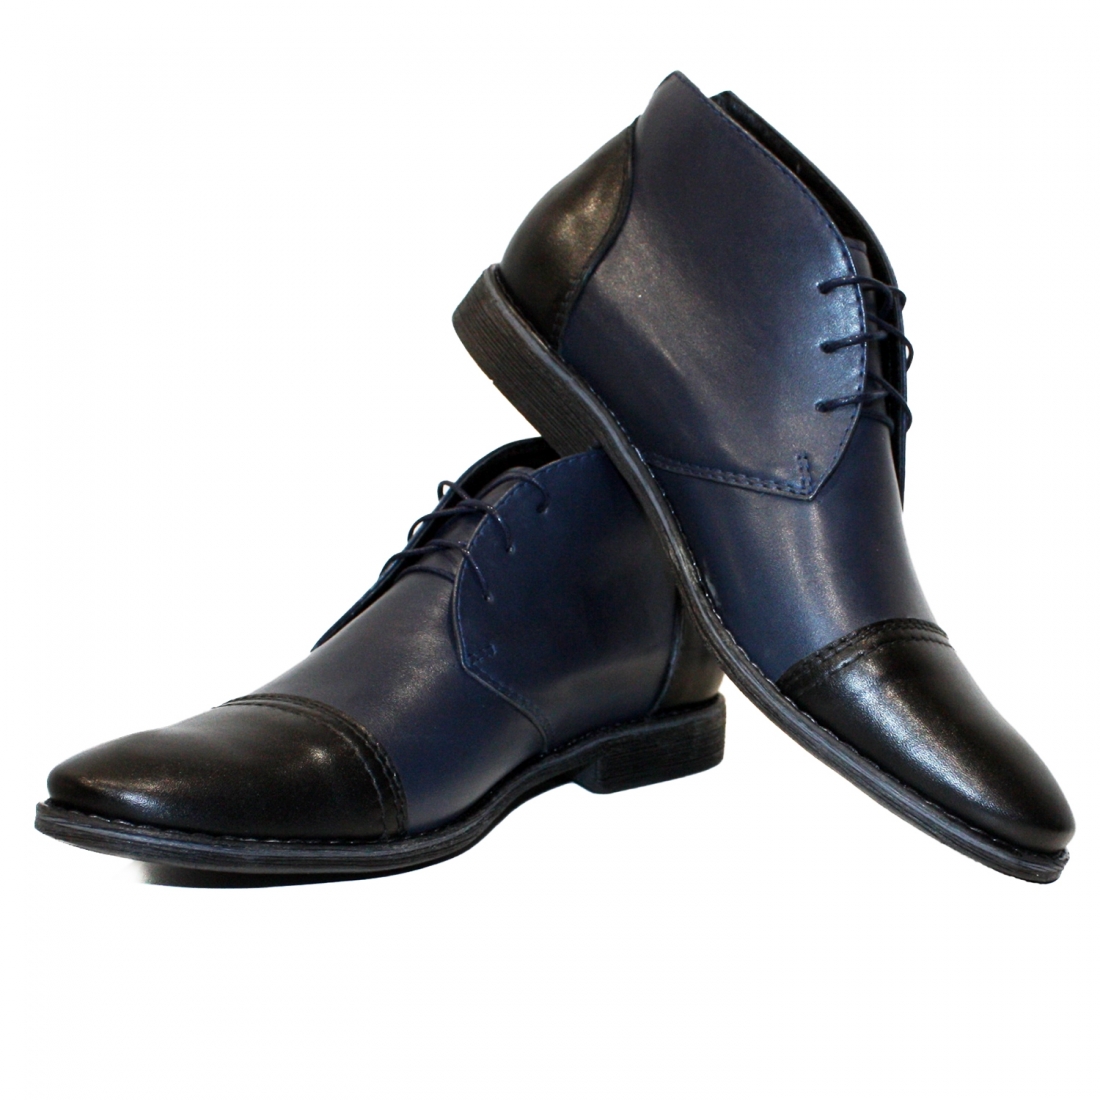 Modello Fuyfuy - Chukka Boots - Handmade Colorful Italian Leather Shoes